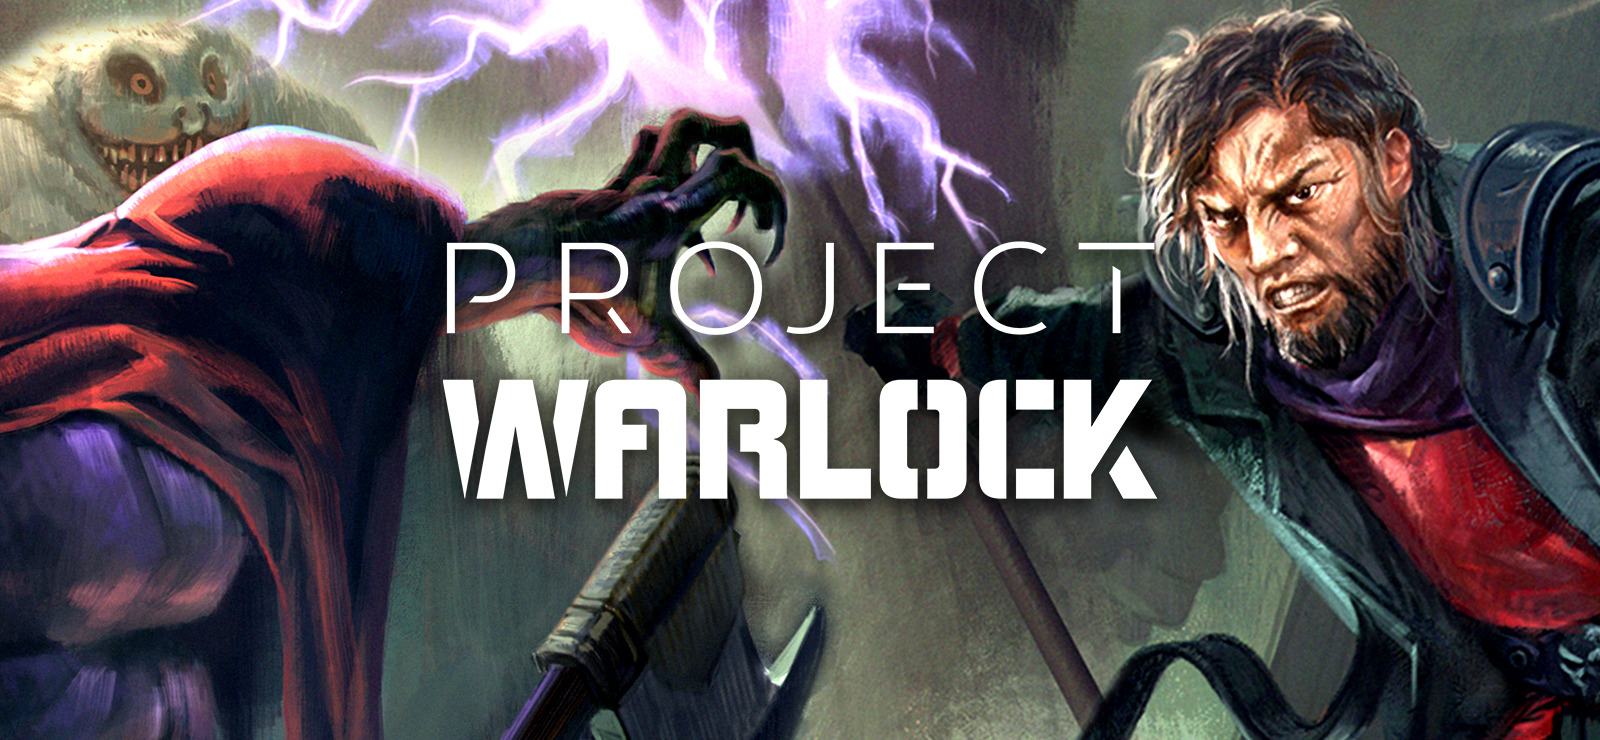 Project Warlock v1.0.0.3 Free Download